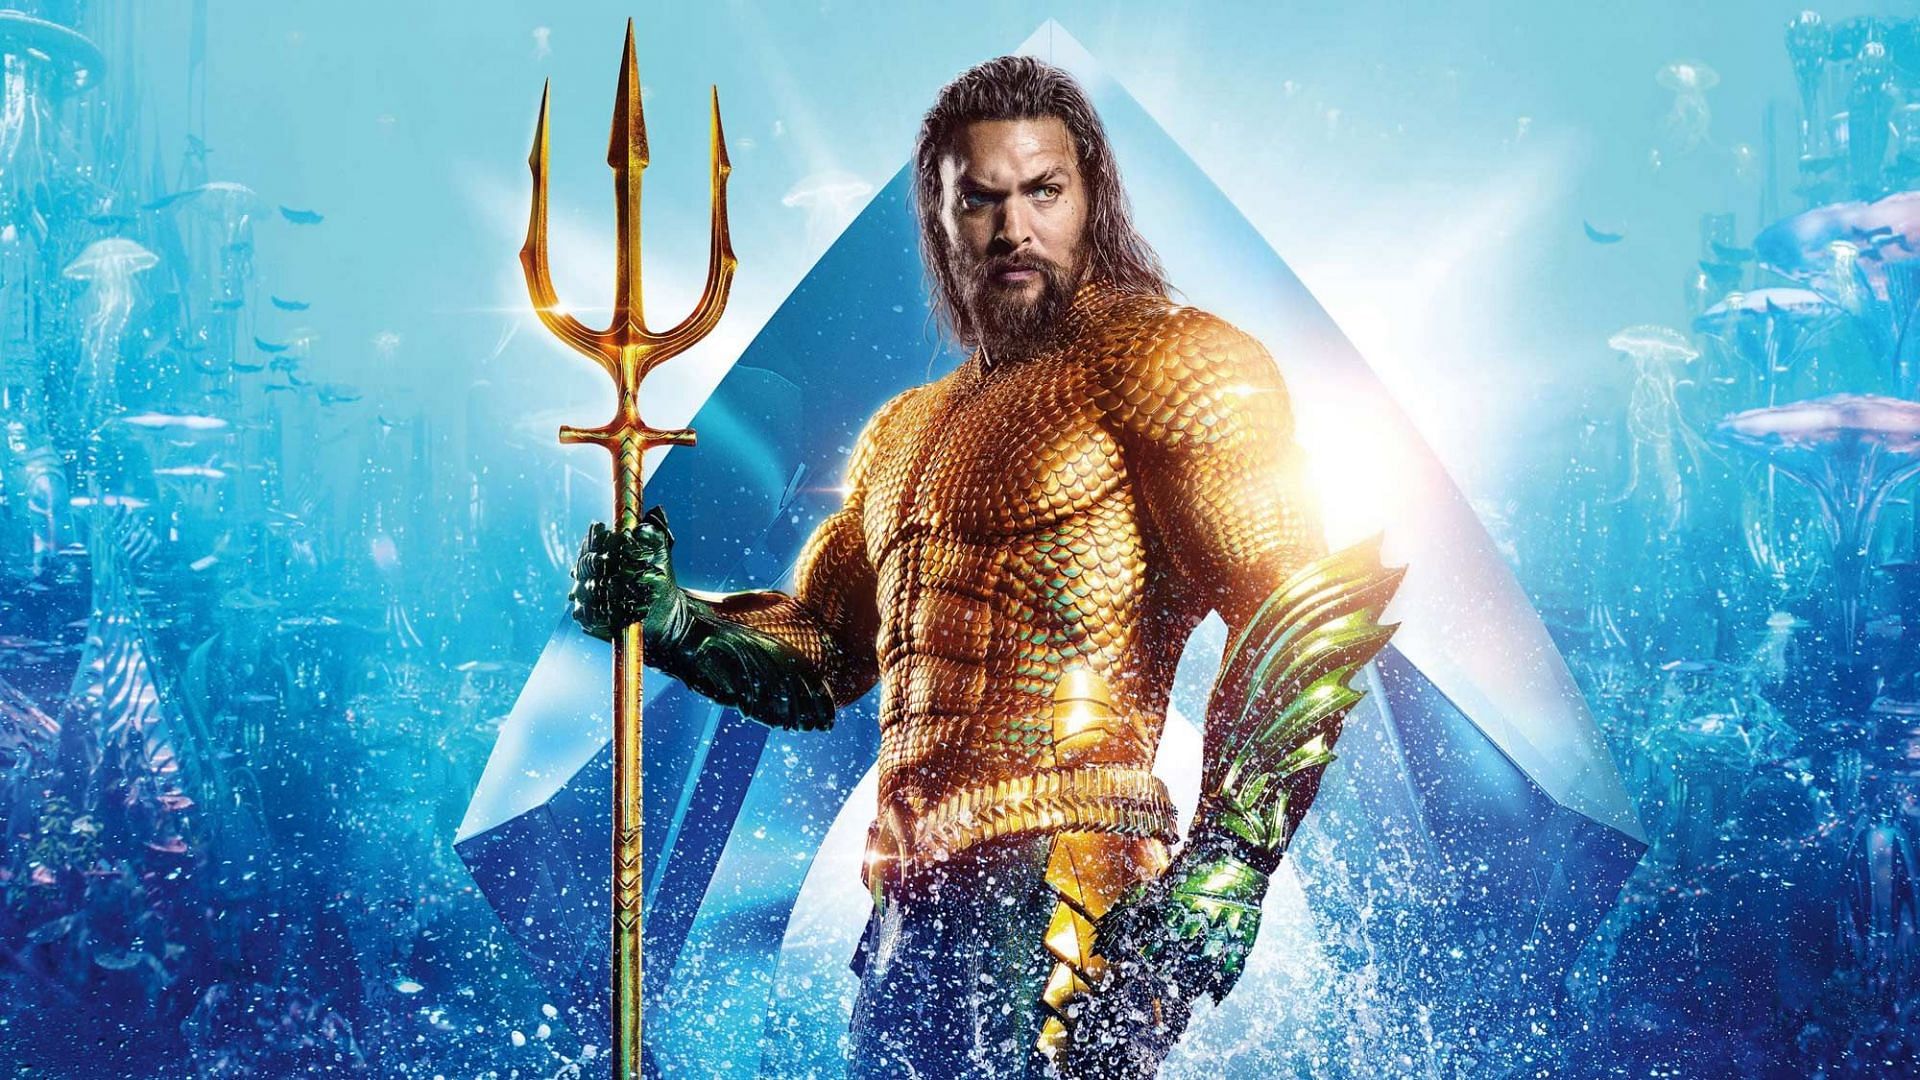 Aquaman as seen in the Aquaman movie (Image via Warner Bros)